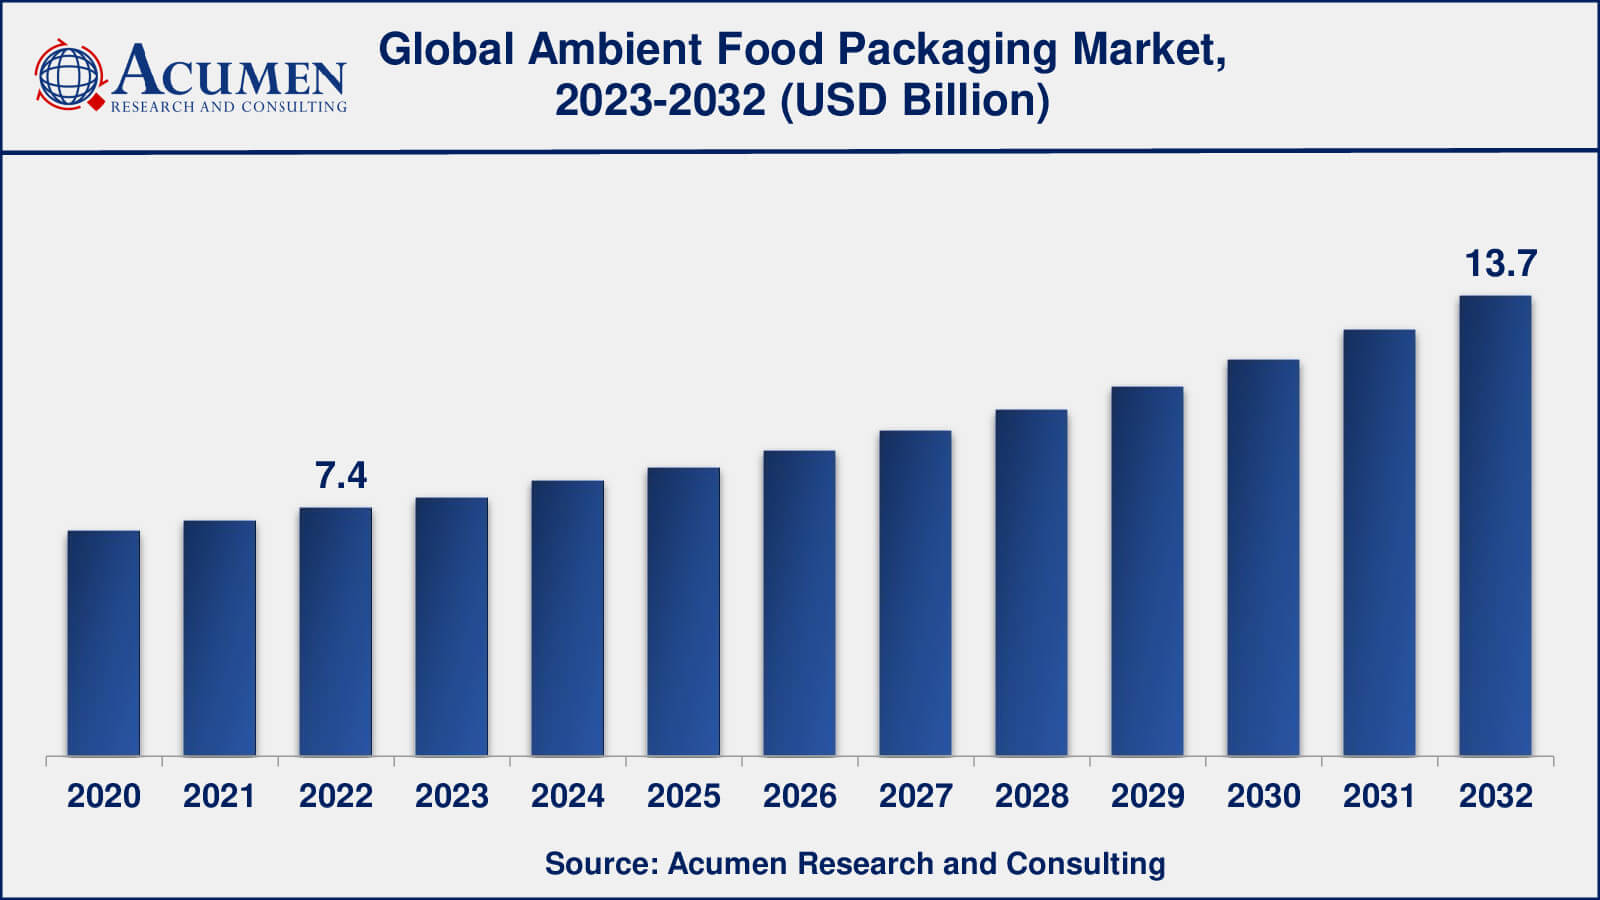 Global Ambient Food Packaging Market Dynamics